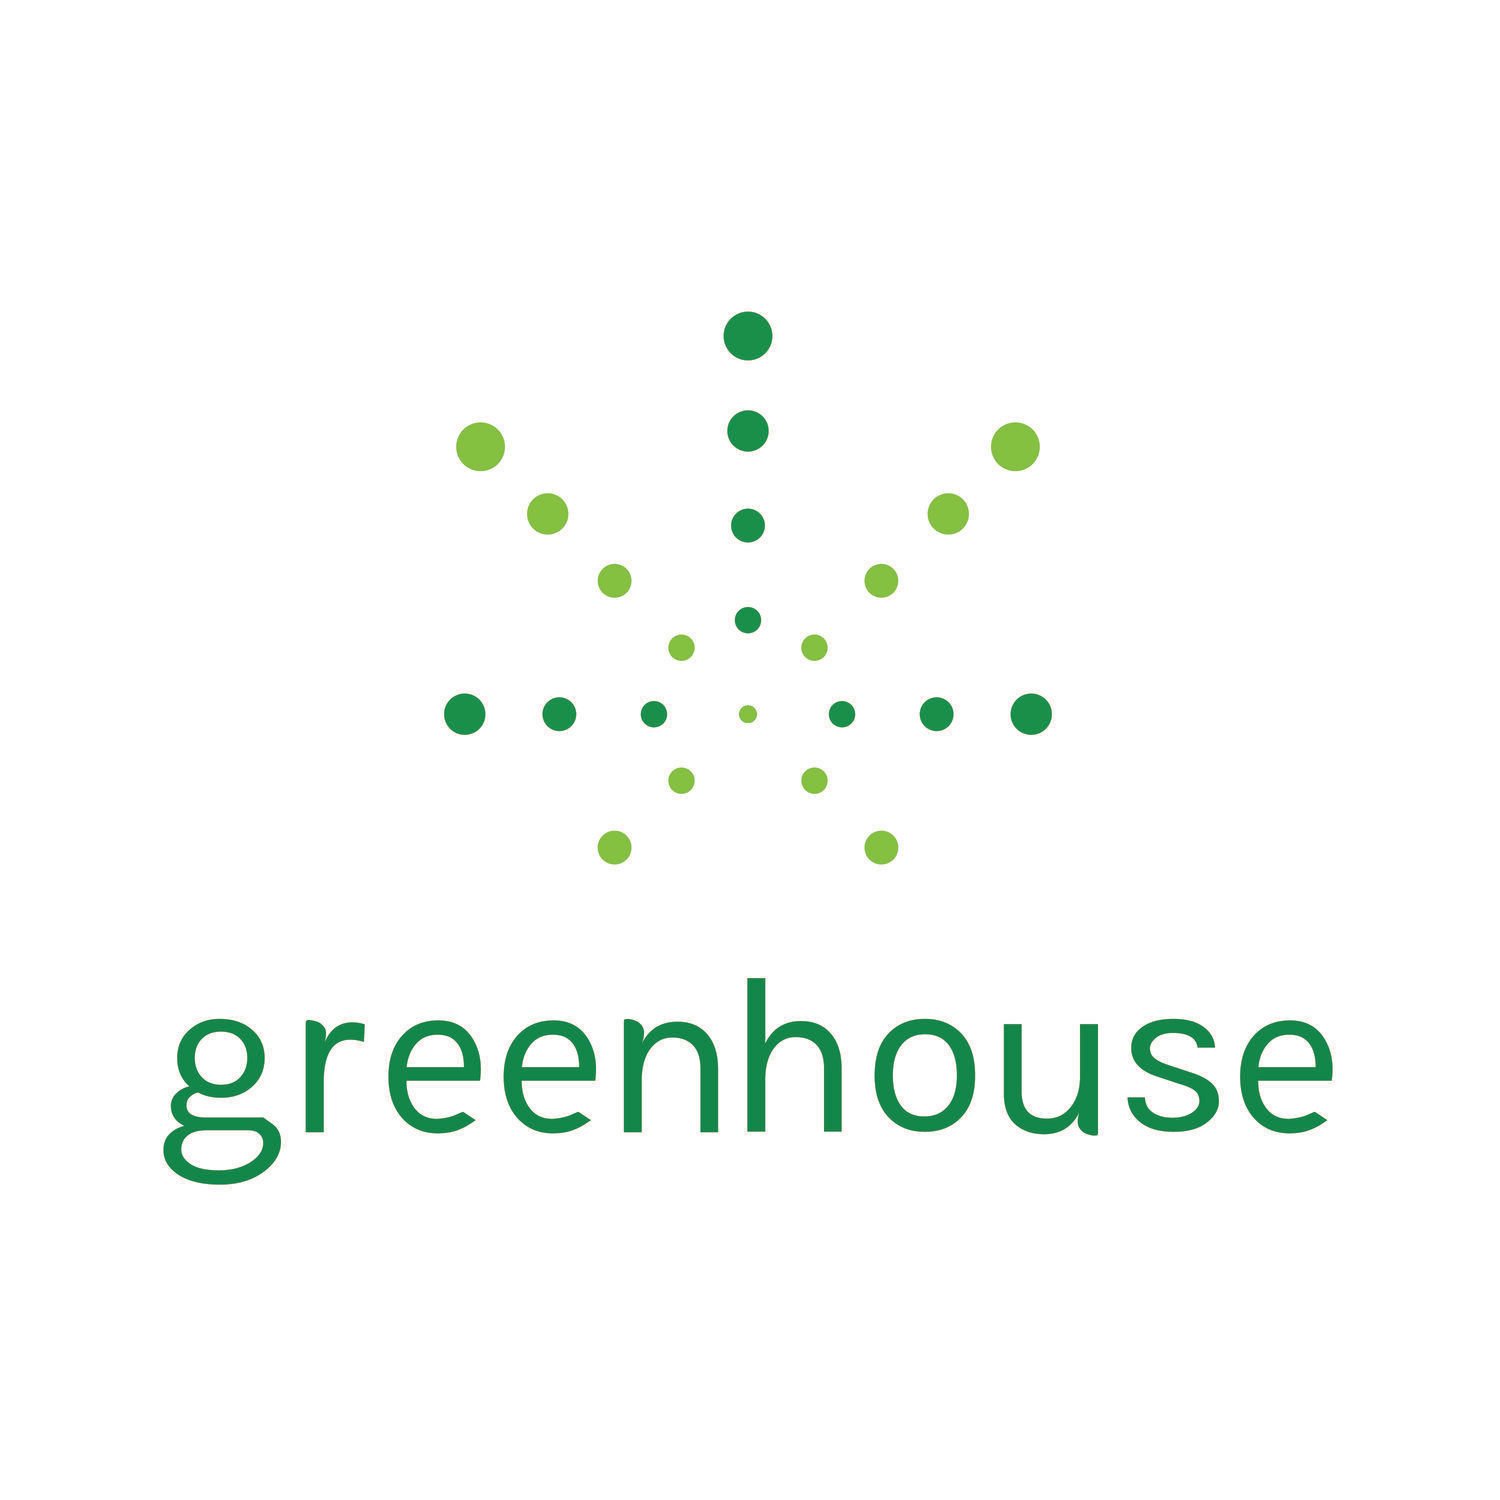 Greenhouse Wellness Medical & Recreational Cannabis Dispensary in Ellicott City